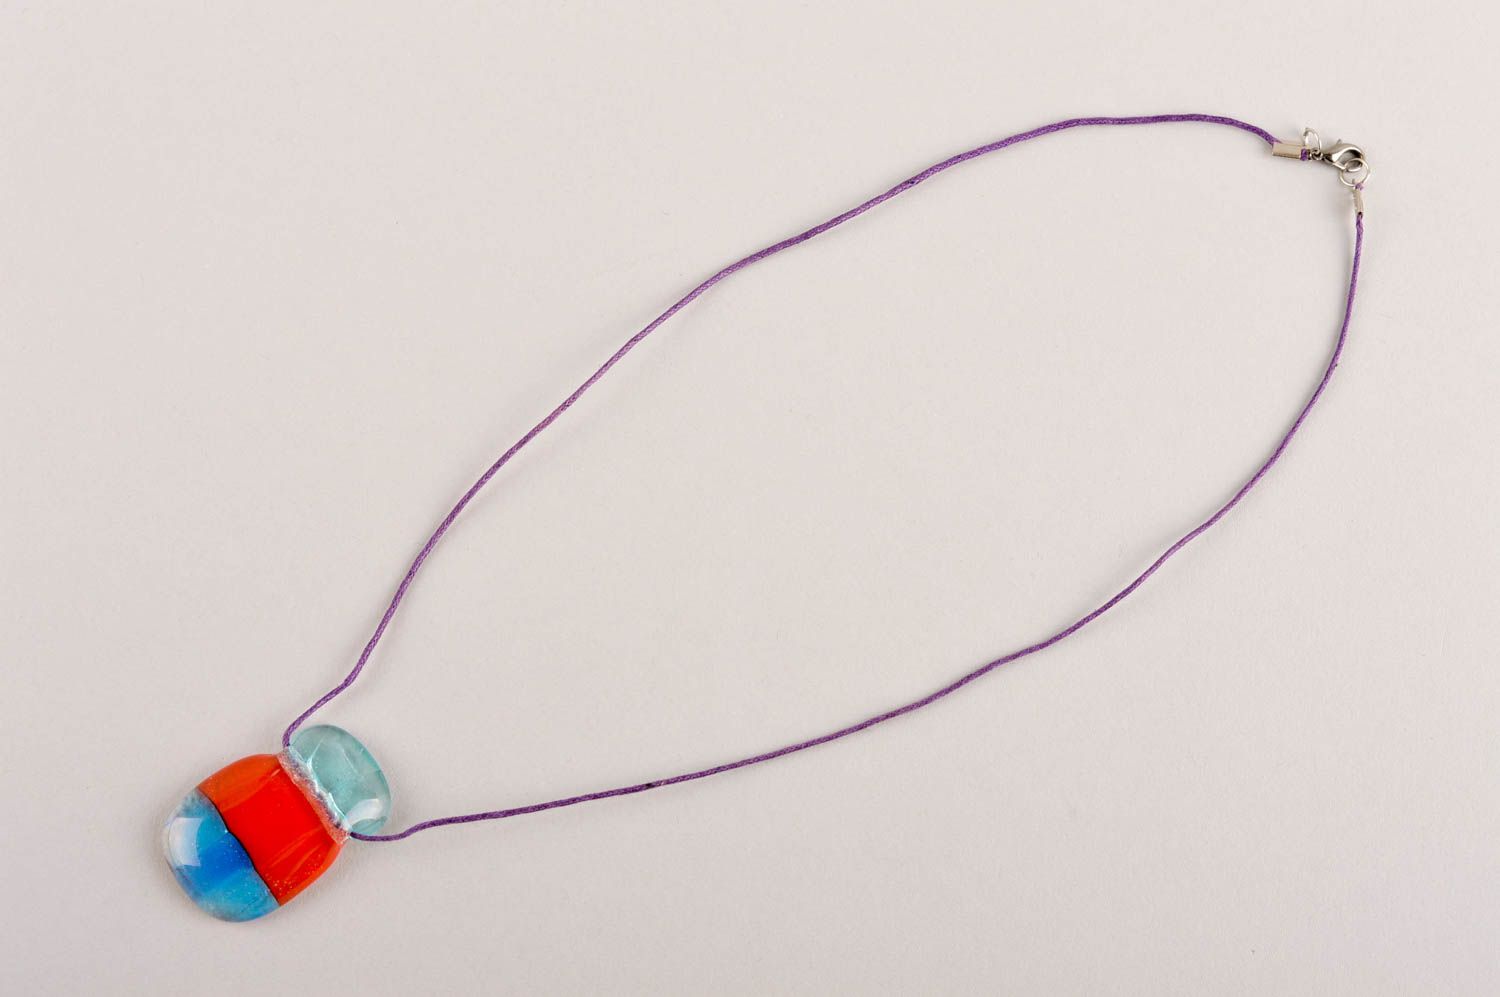 Handmade pendant designer pendant unusual glass accessories gift ideas photo 4